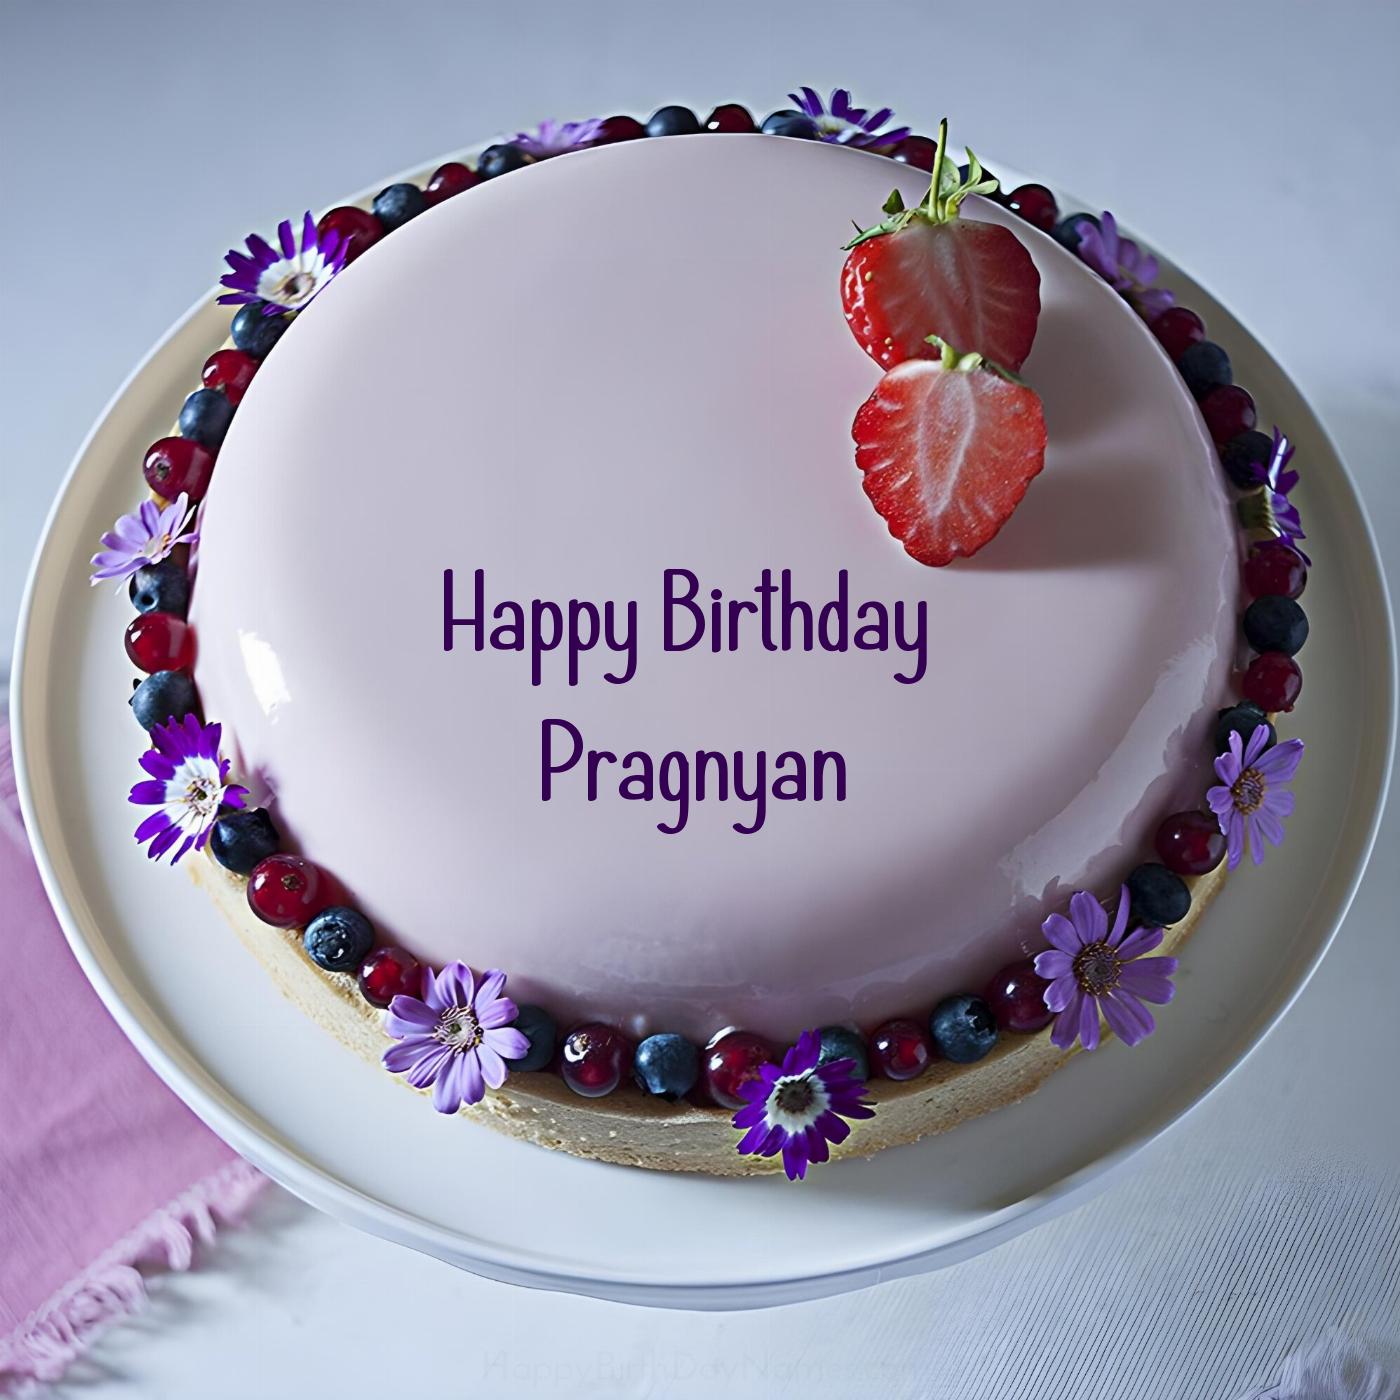 Happy Birthday Pragnyan Strawberry Flowers Cake